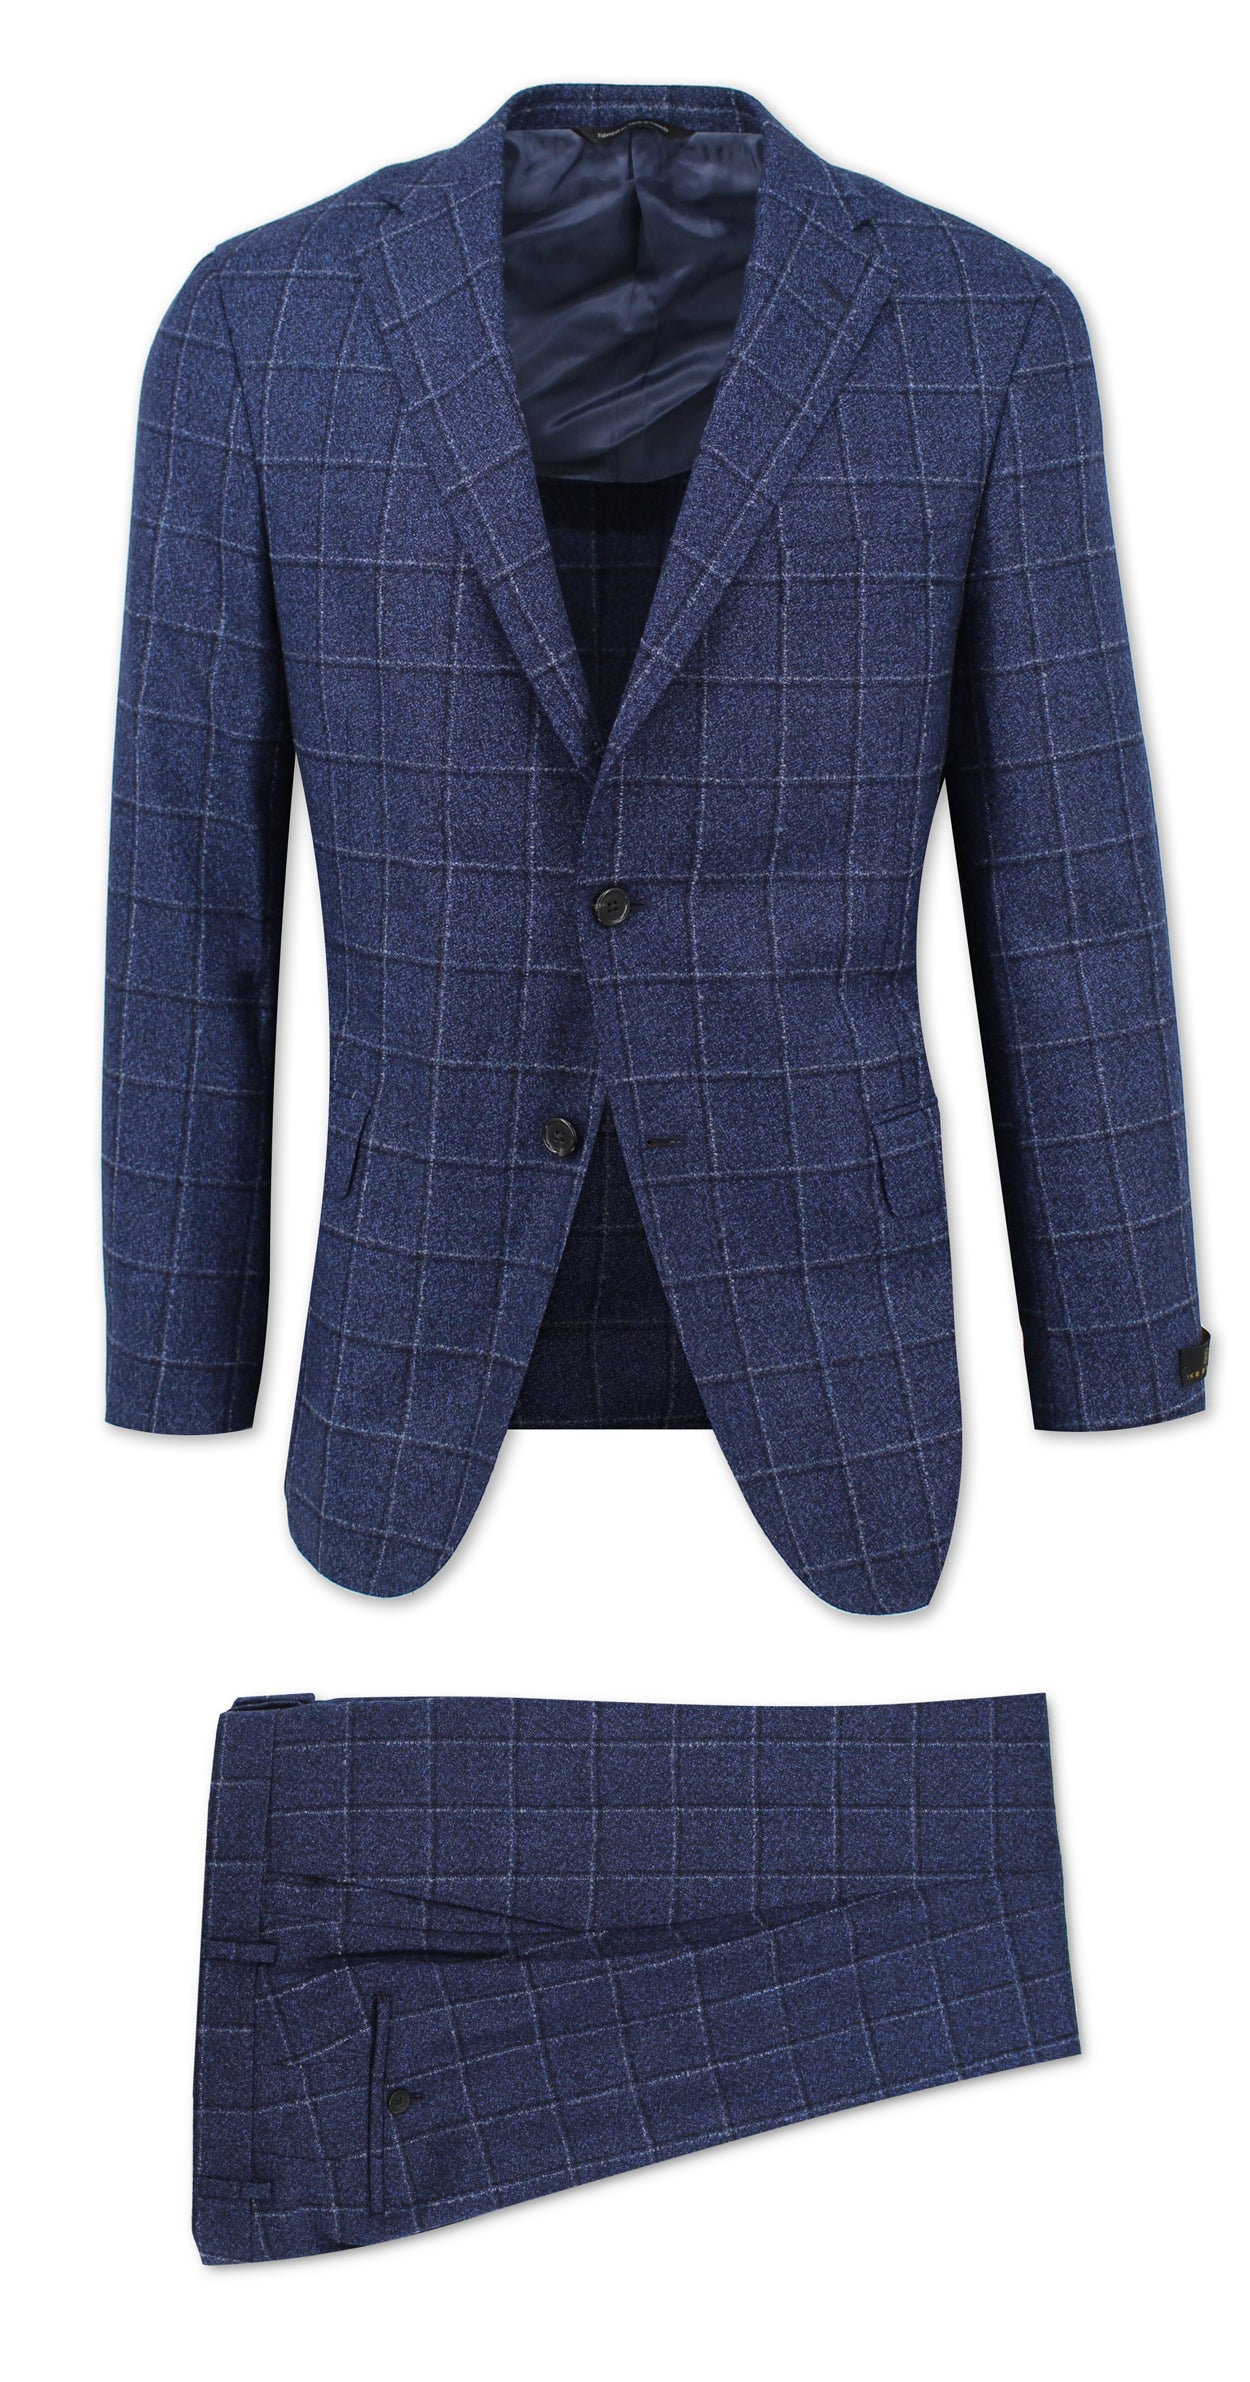 Dream Tweed Navy Windowpane Suit